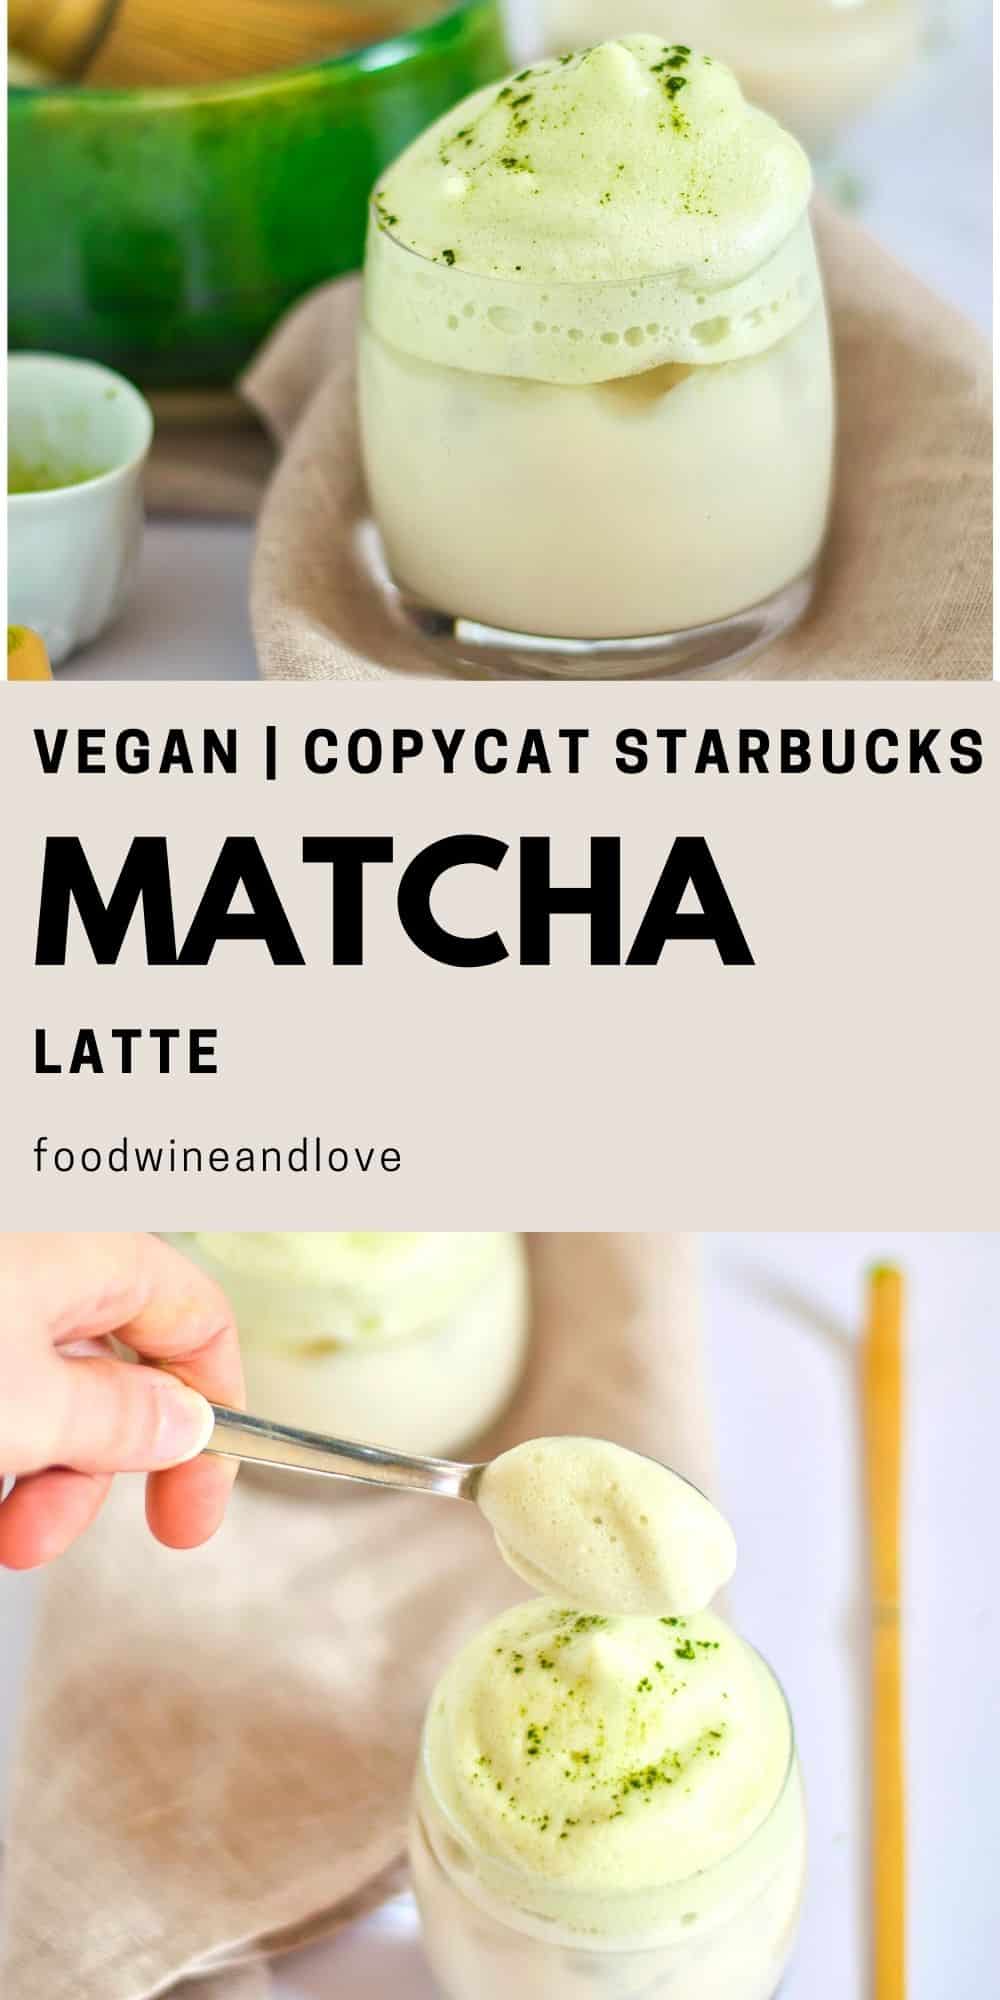 Make a Vegan Matcha Latte